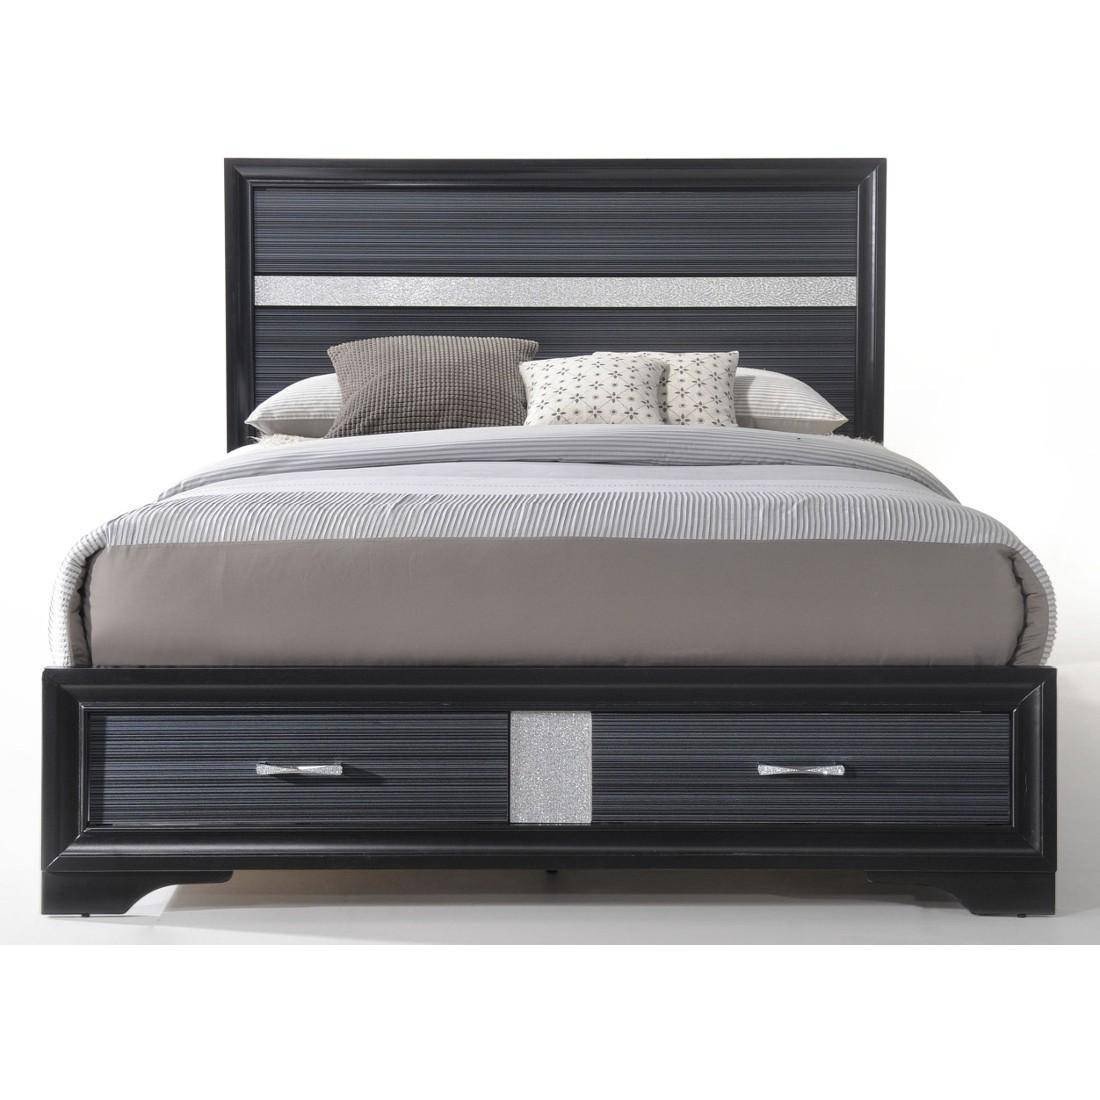 Full Size Bedroom Furniture Set Sale Best Of Black Wood Queen Storage Bedroom Set 4pcs Naima Q Acme